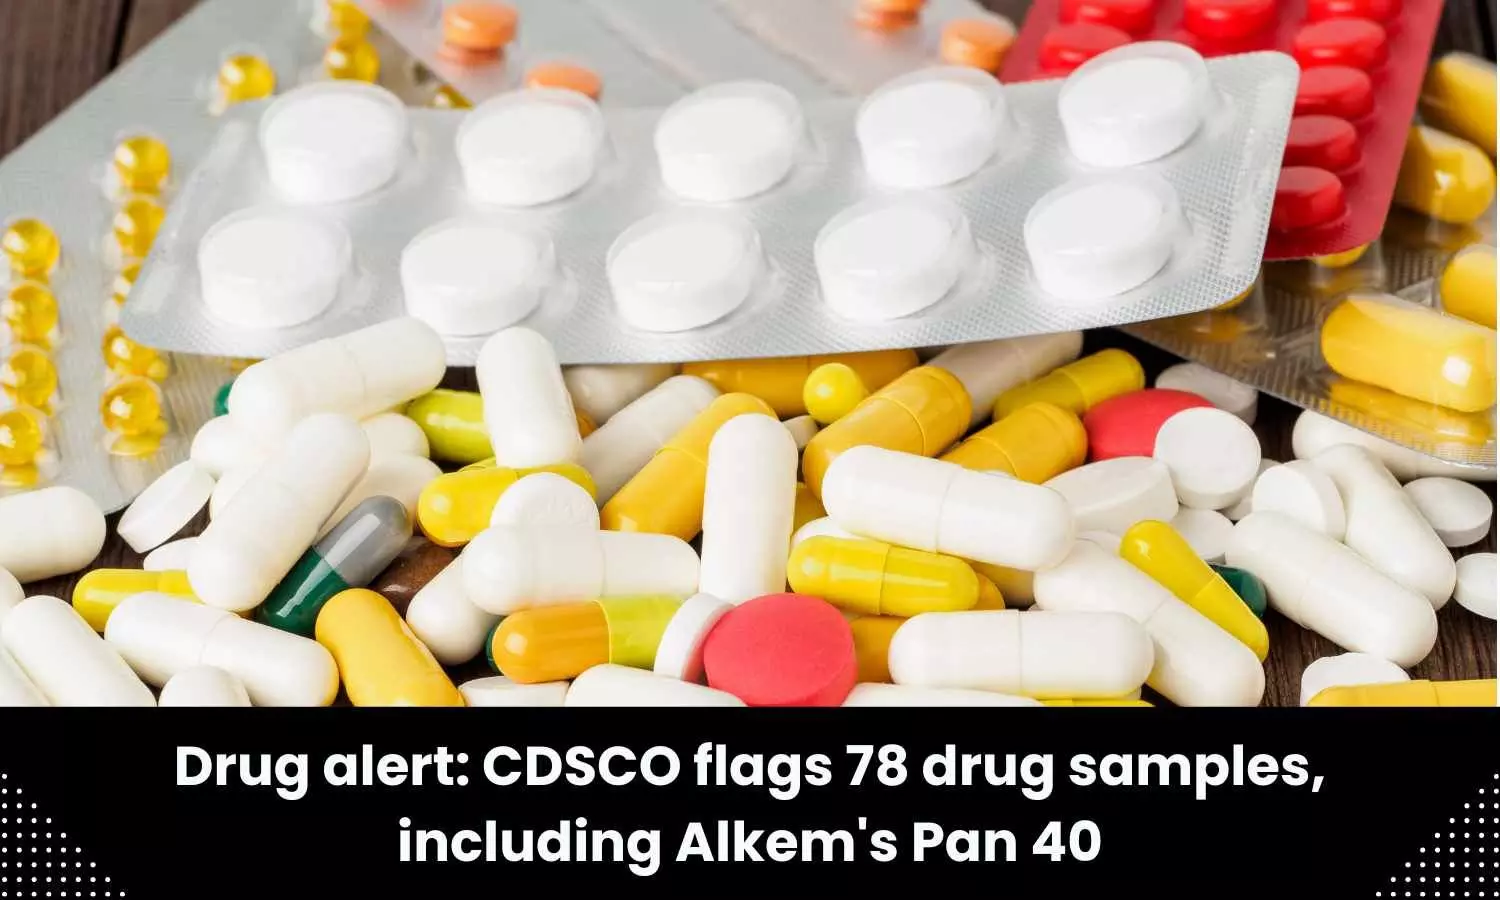 Drug Safety alert: CDSCO flags 78 drug samples